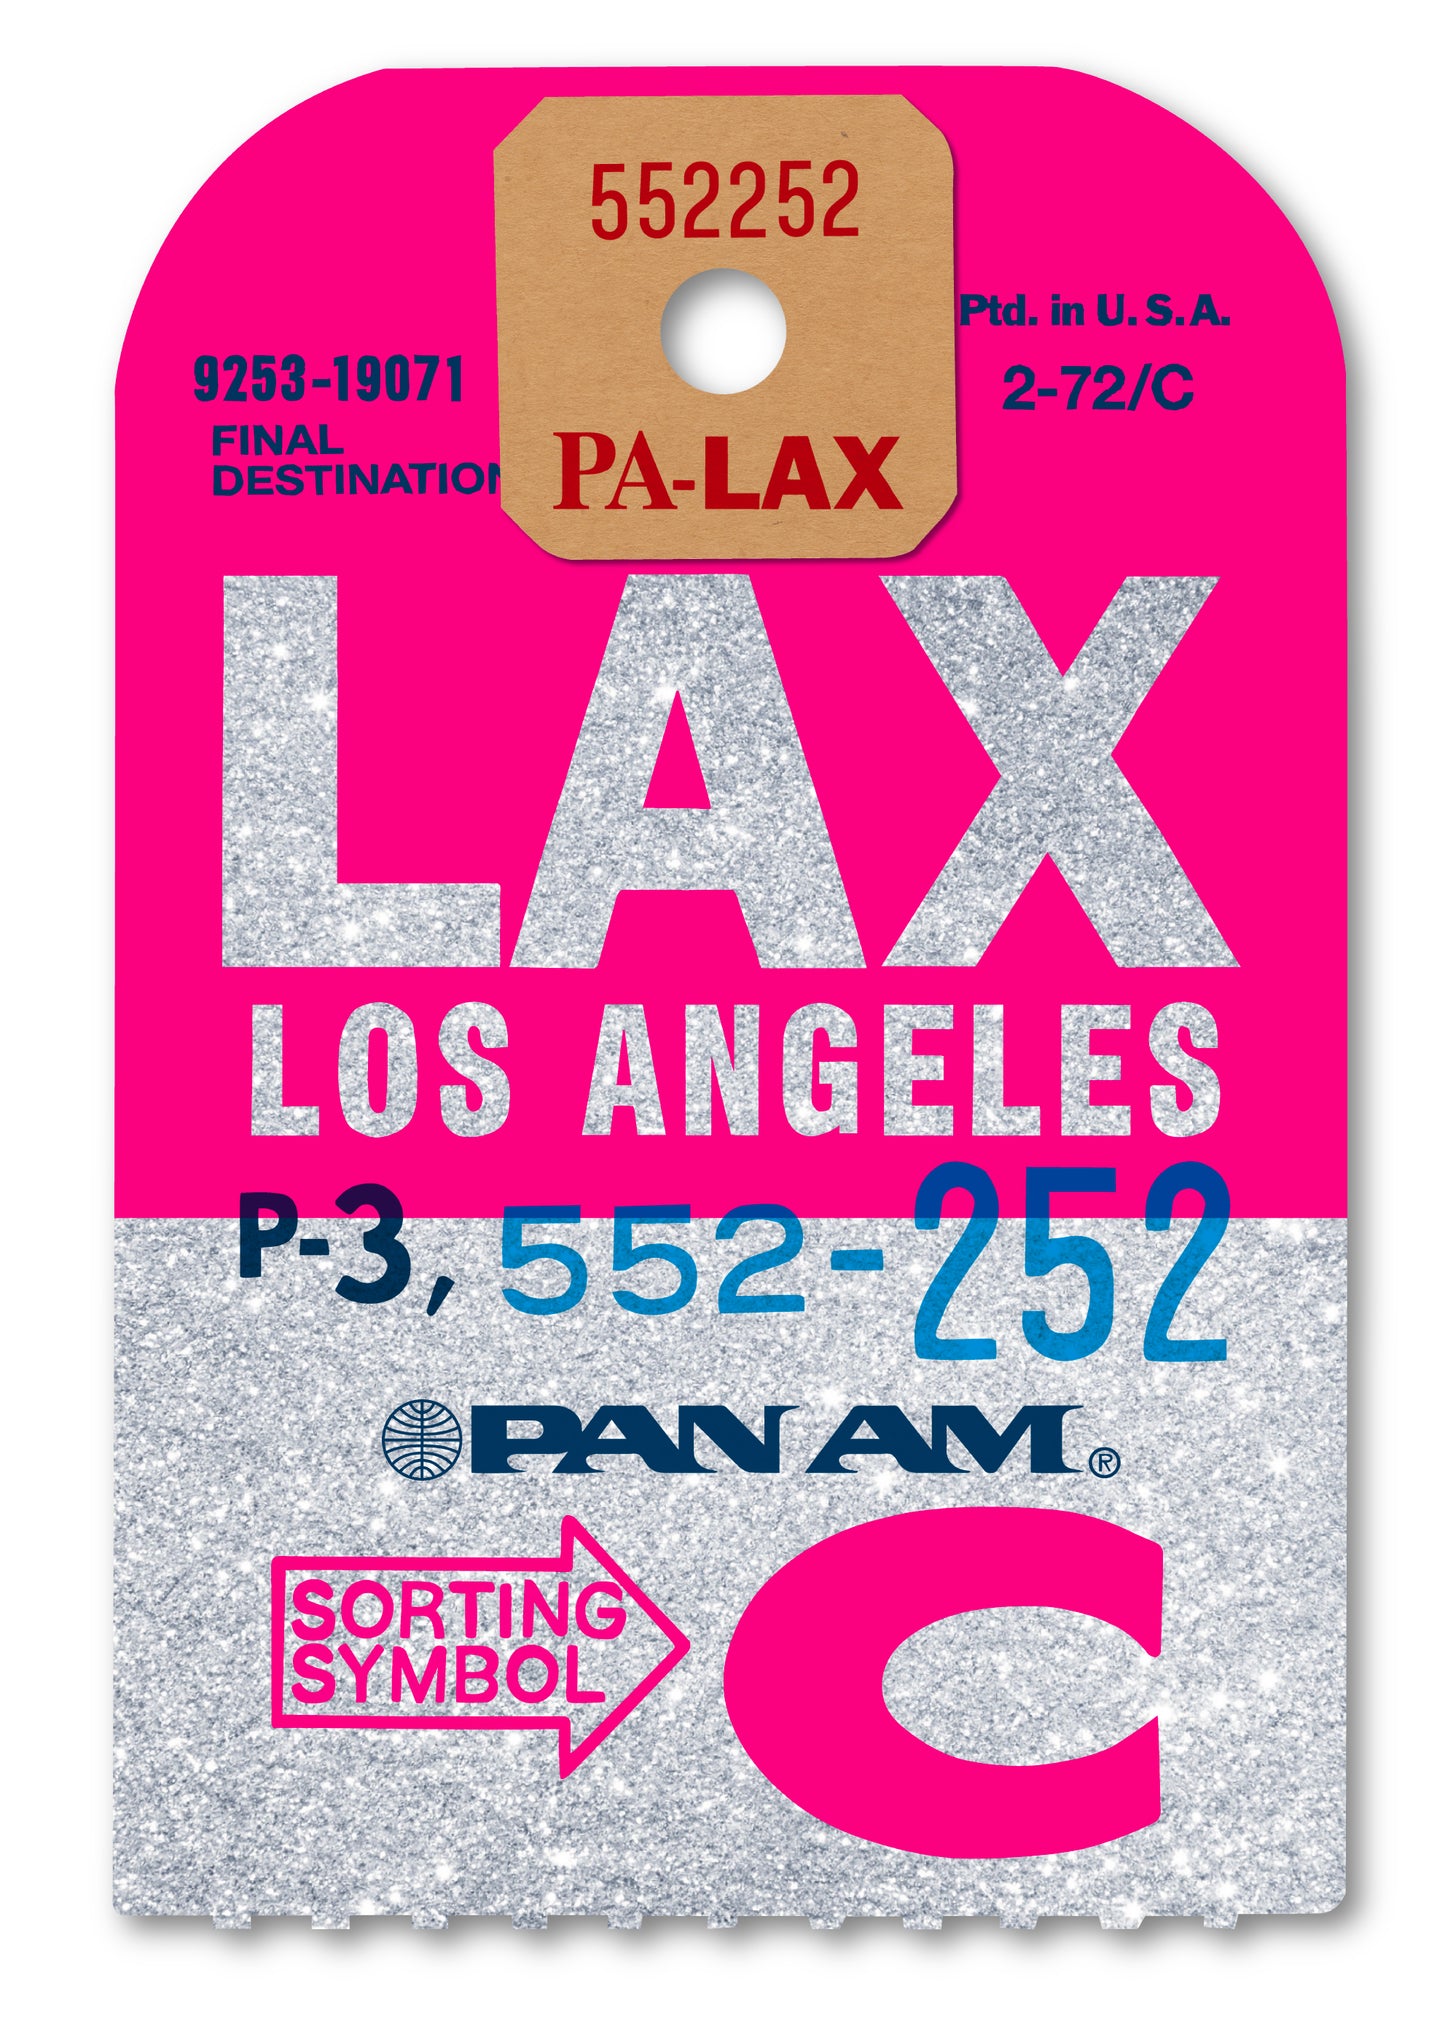 PAN AM GLITTER ‘LOS ANGELES' LUGGAGE TAG